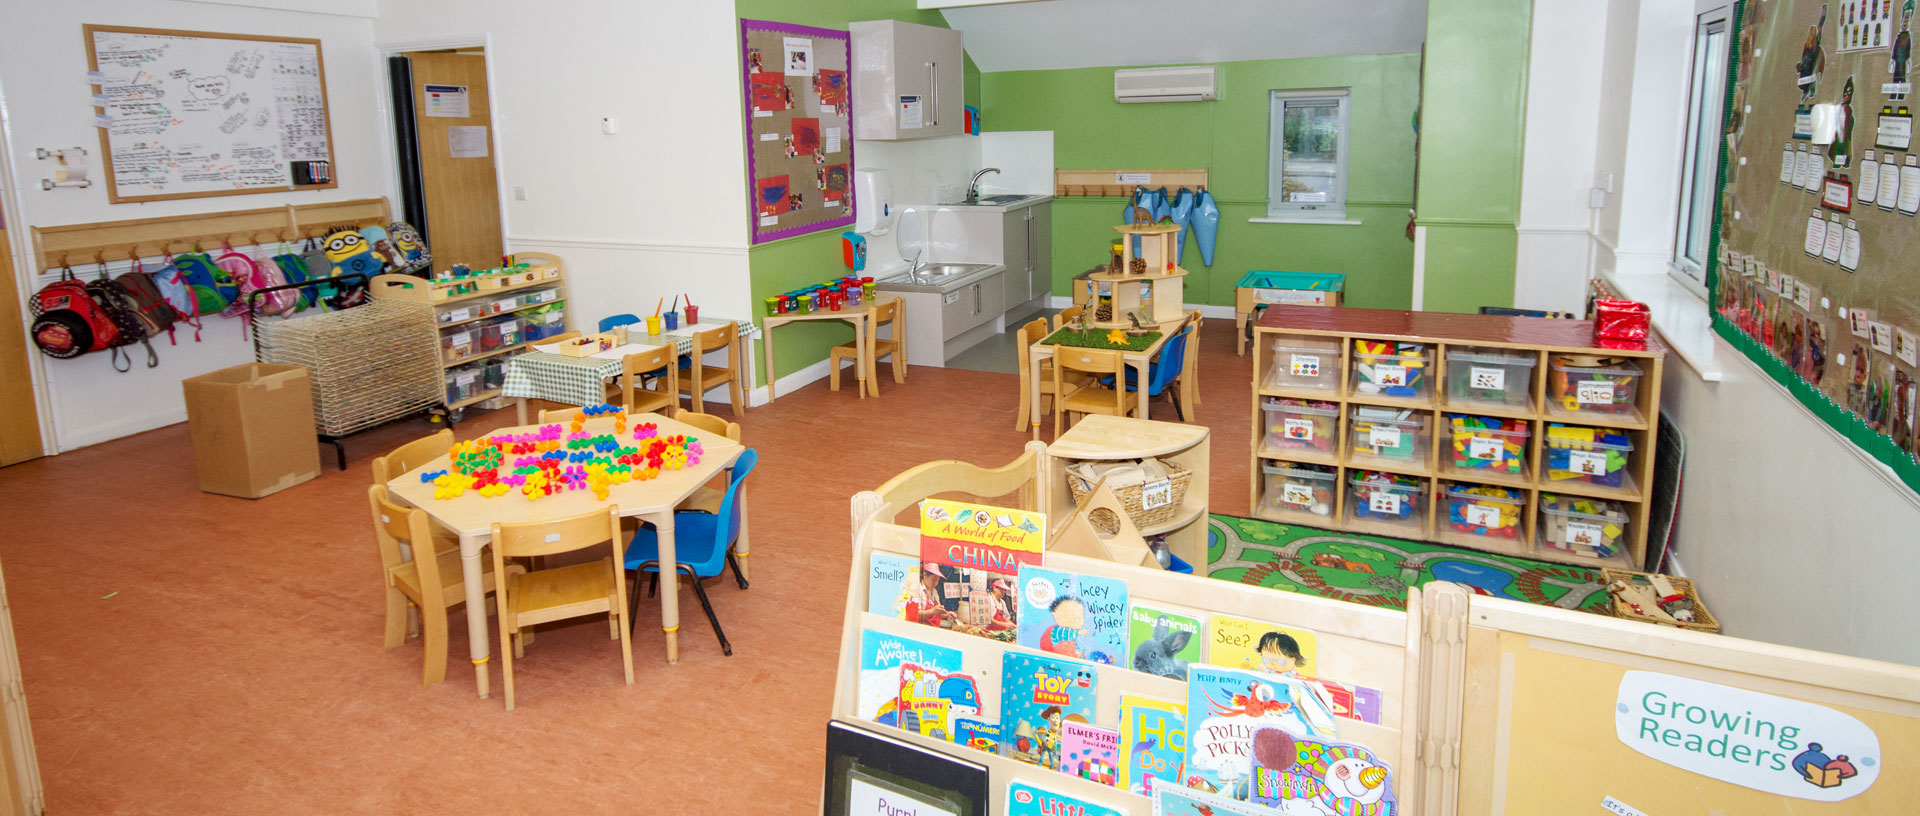 Bury St Edmunds Day Nursery and Preschool